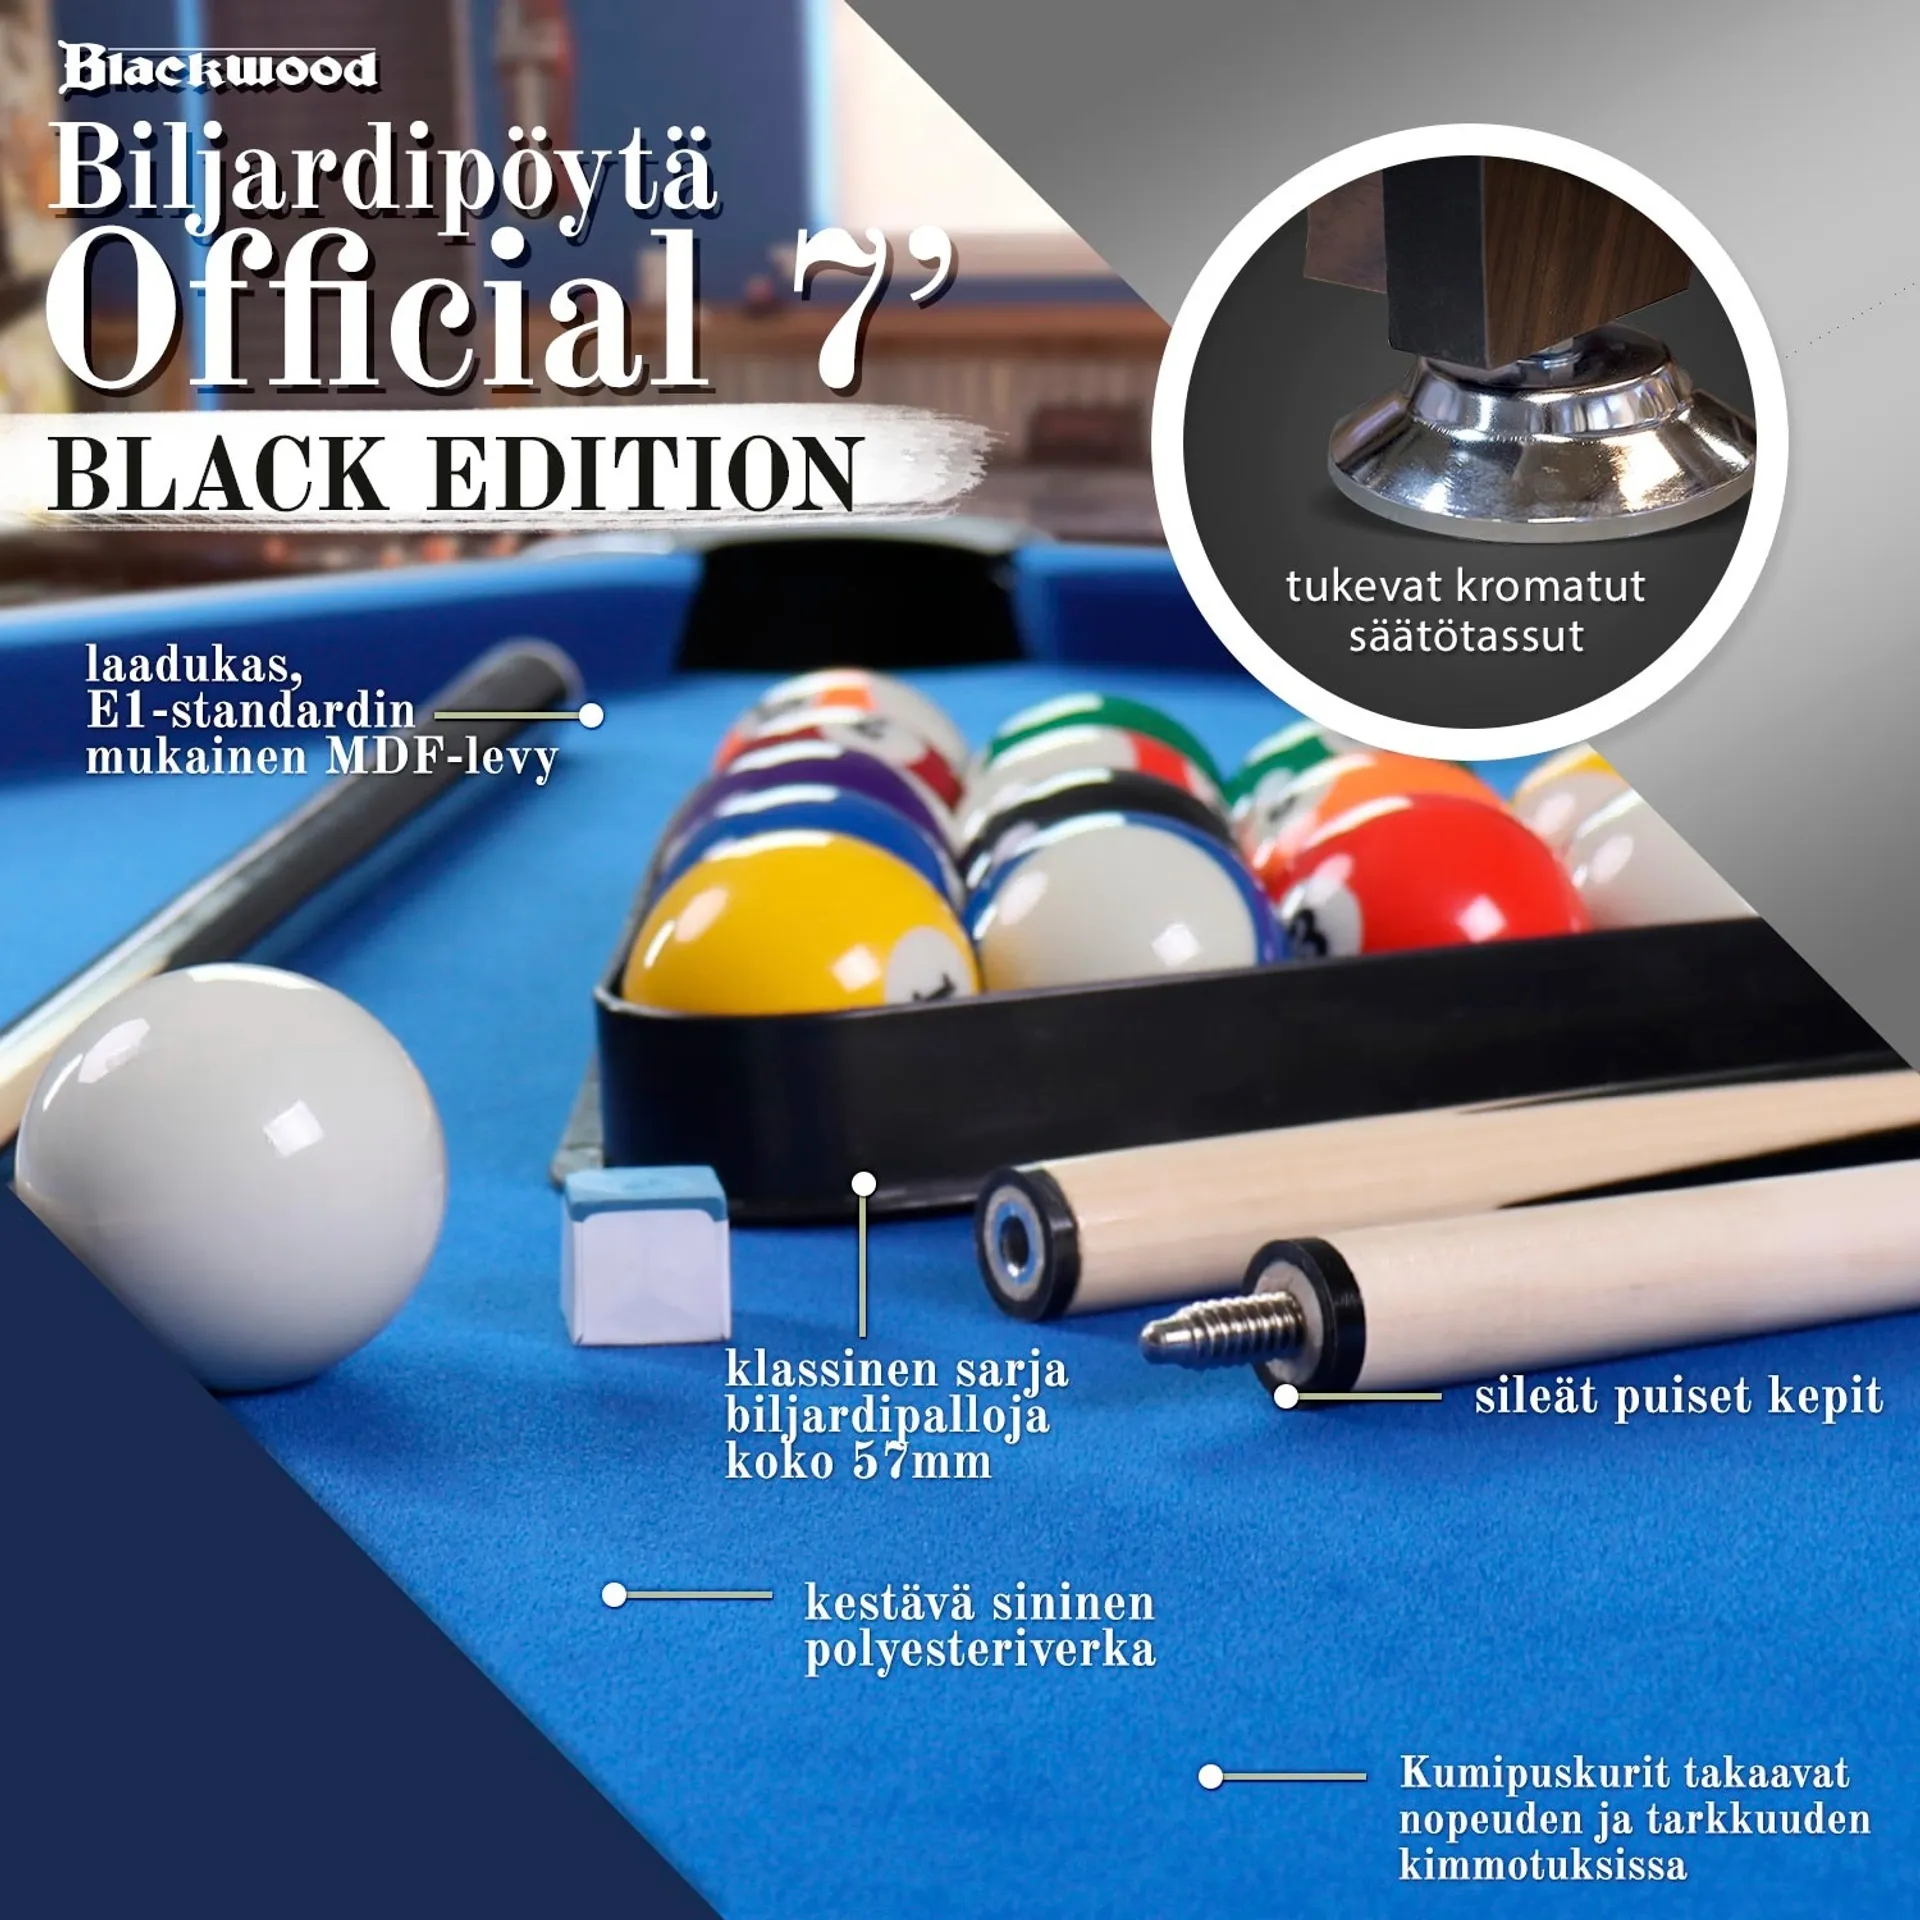 Blackwood Biljardipöytä, 7' Official Black - 4